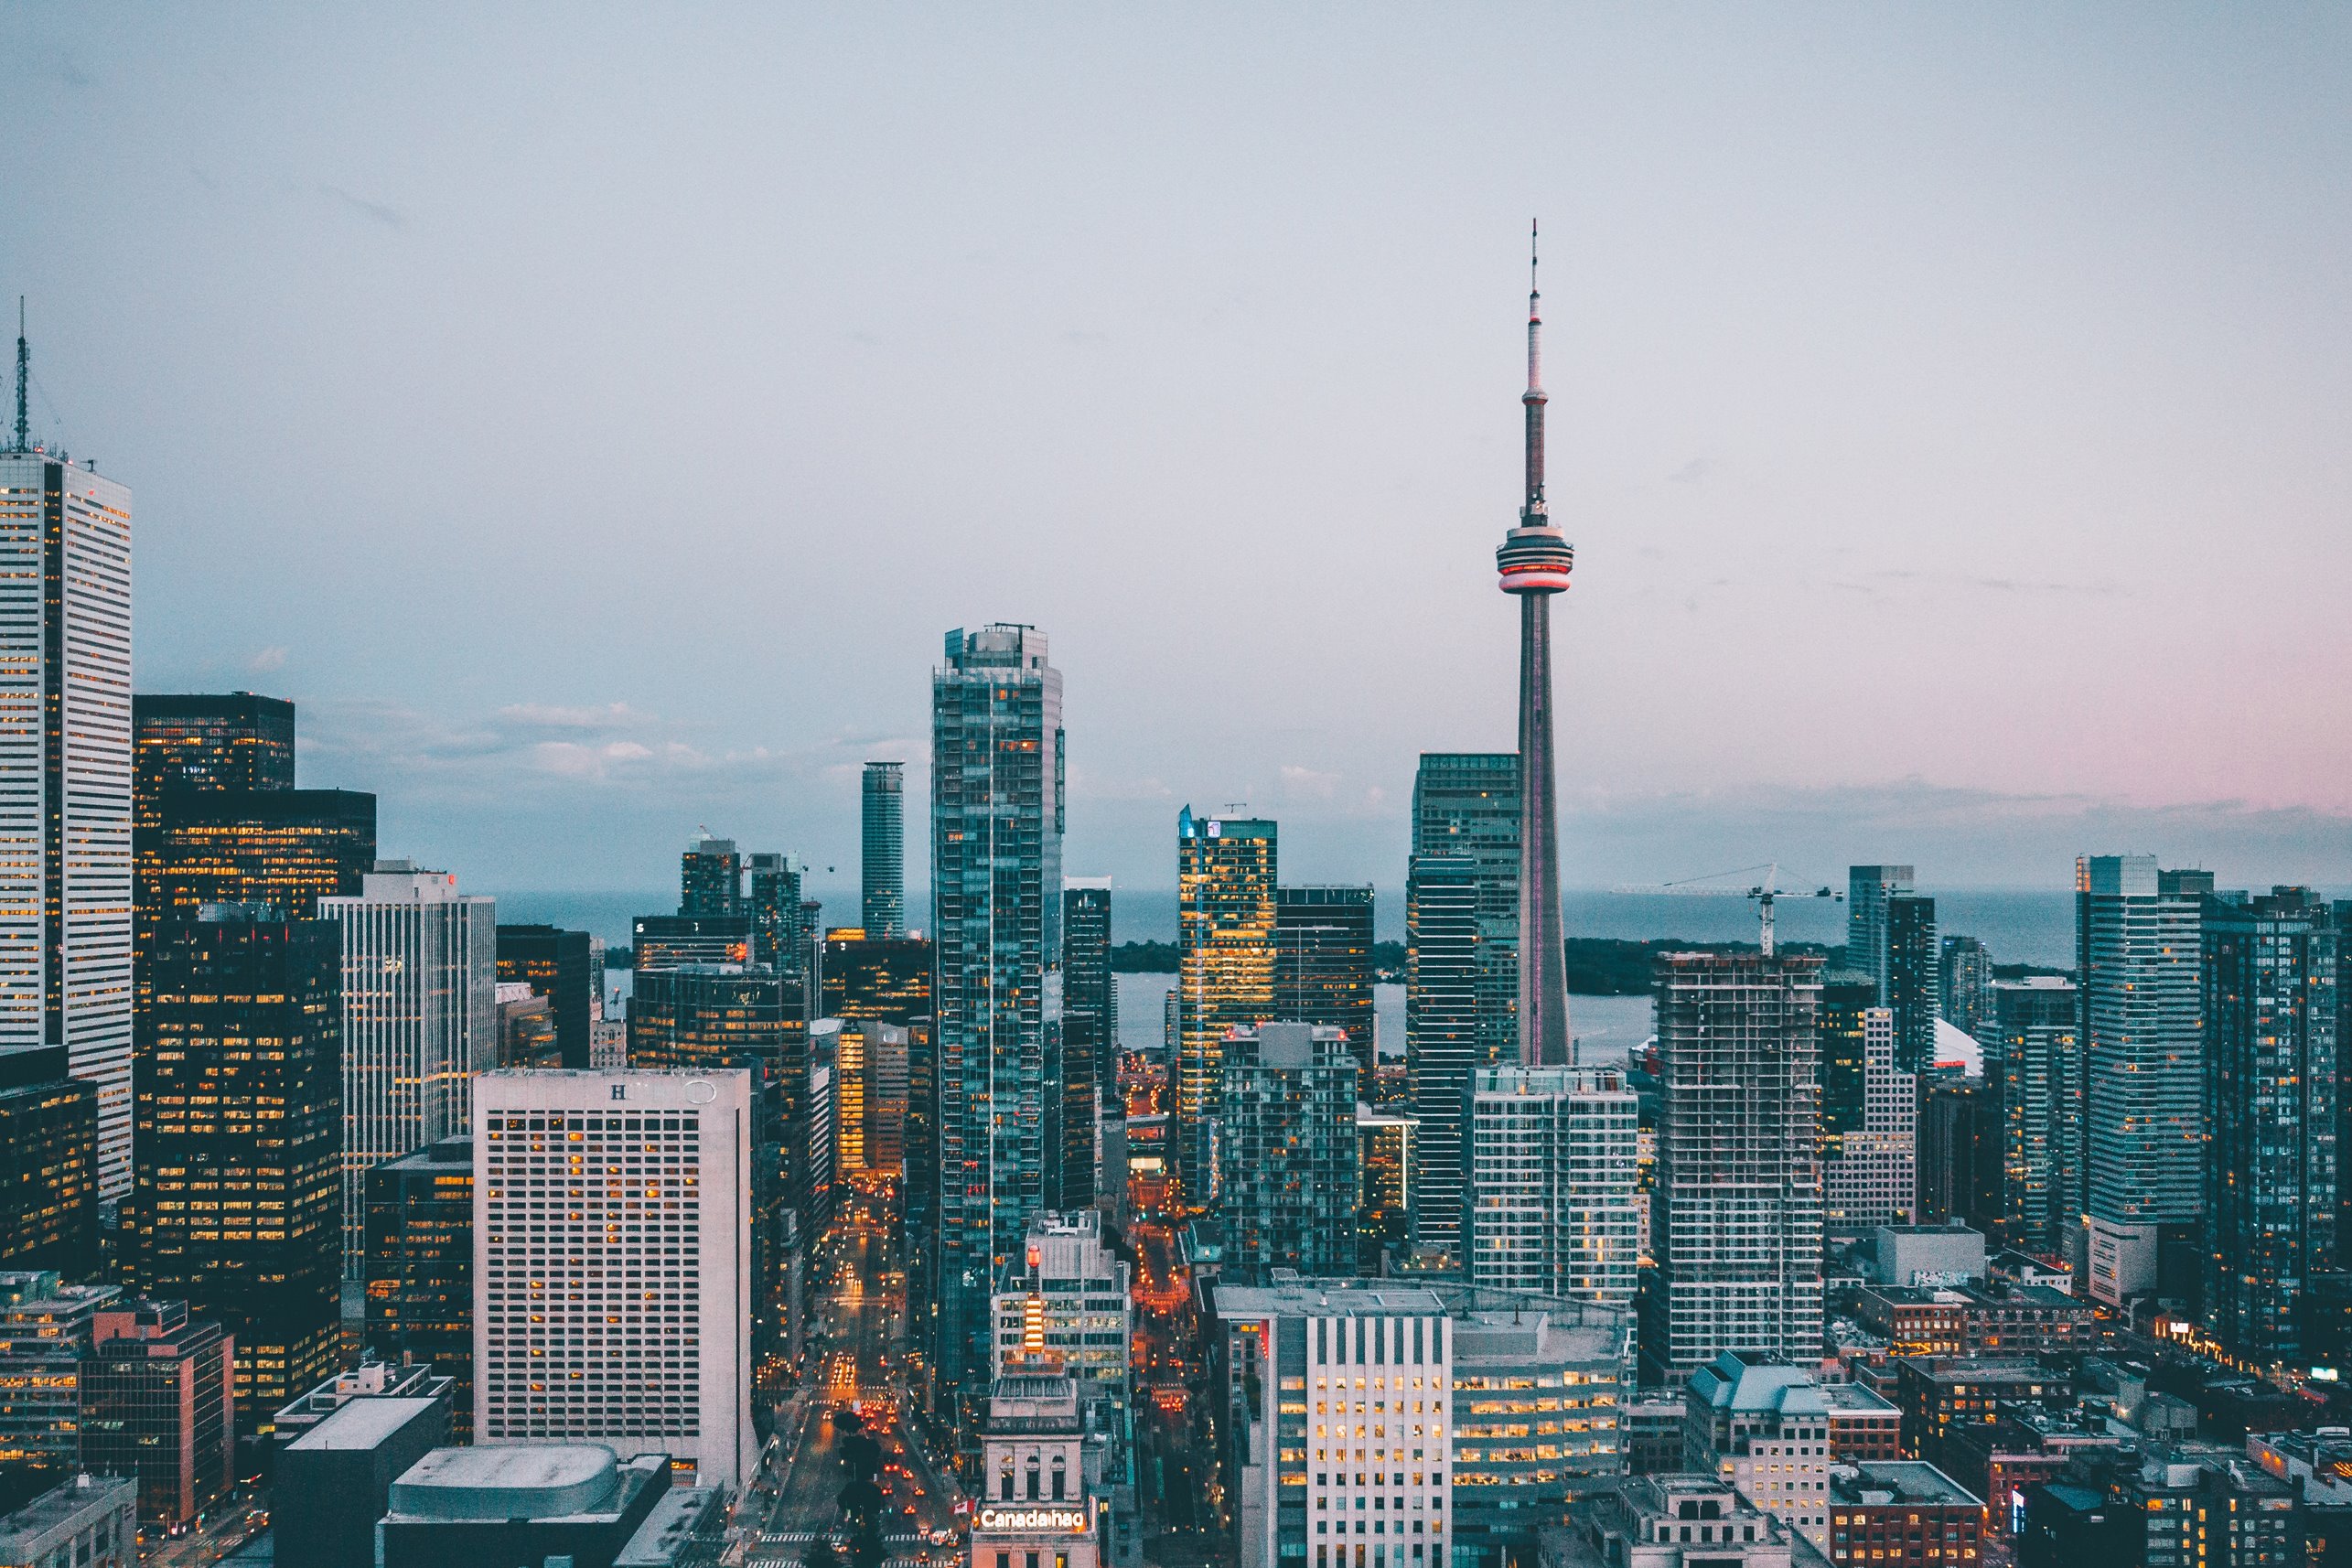 A skyline shot of downtown Toronto against a setting grey sky.